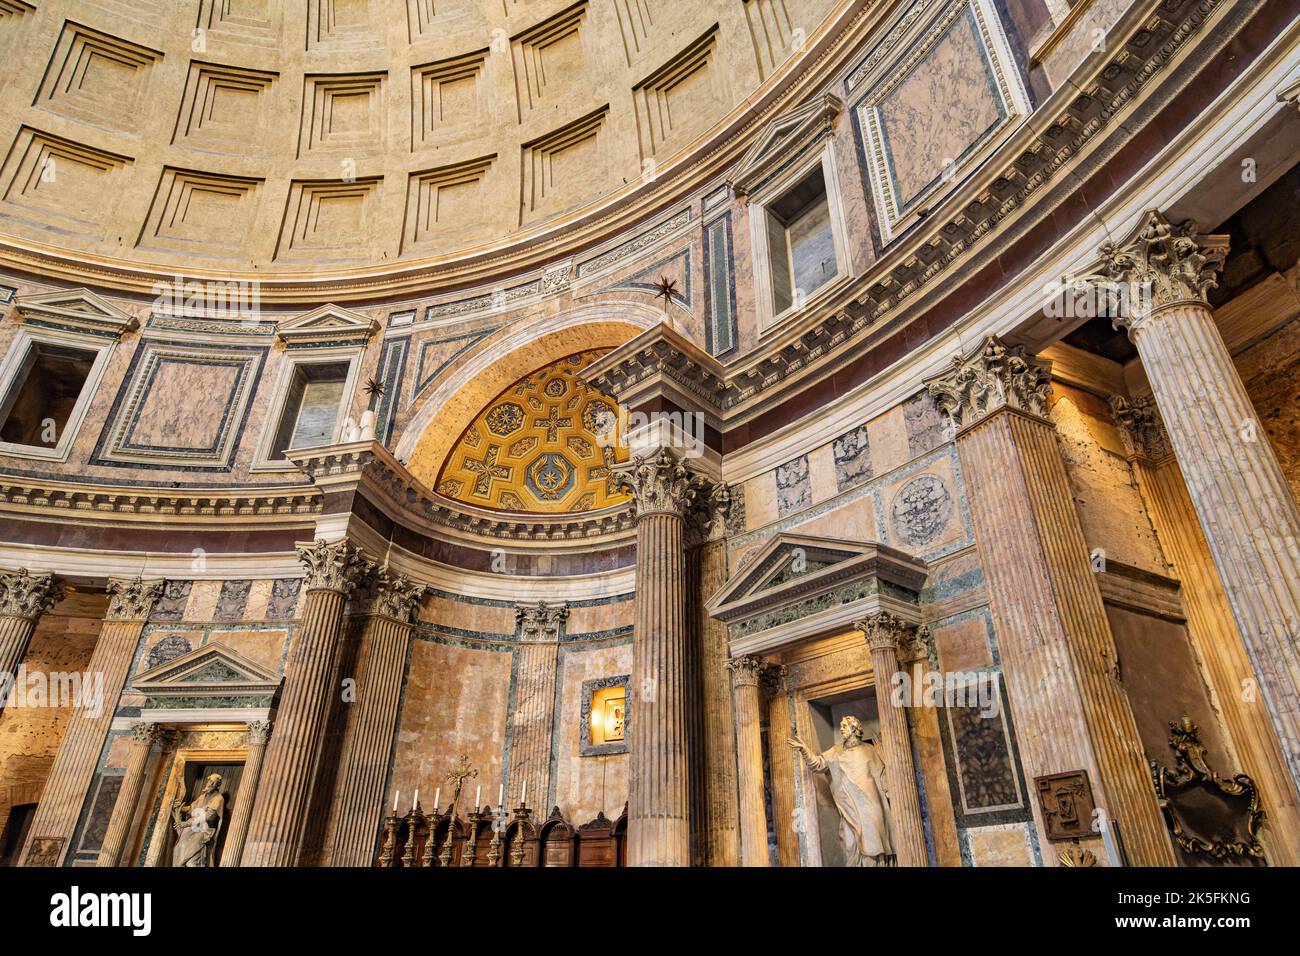 Pantheon (Basilica di Santa Maria ad Martyres or Basilica of St. Mary and the Martyrs), Roman Catholic Basilica, Rome, Italy Stock Photo